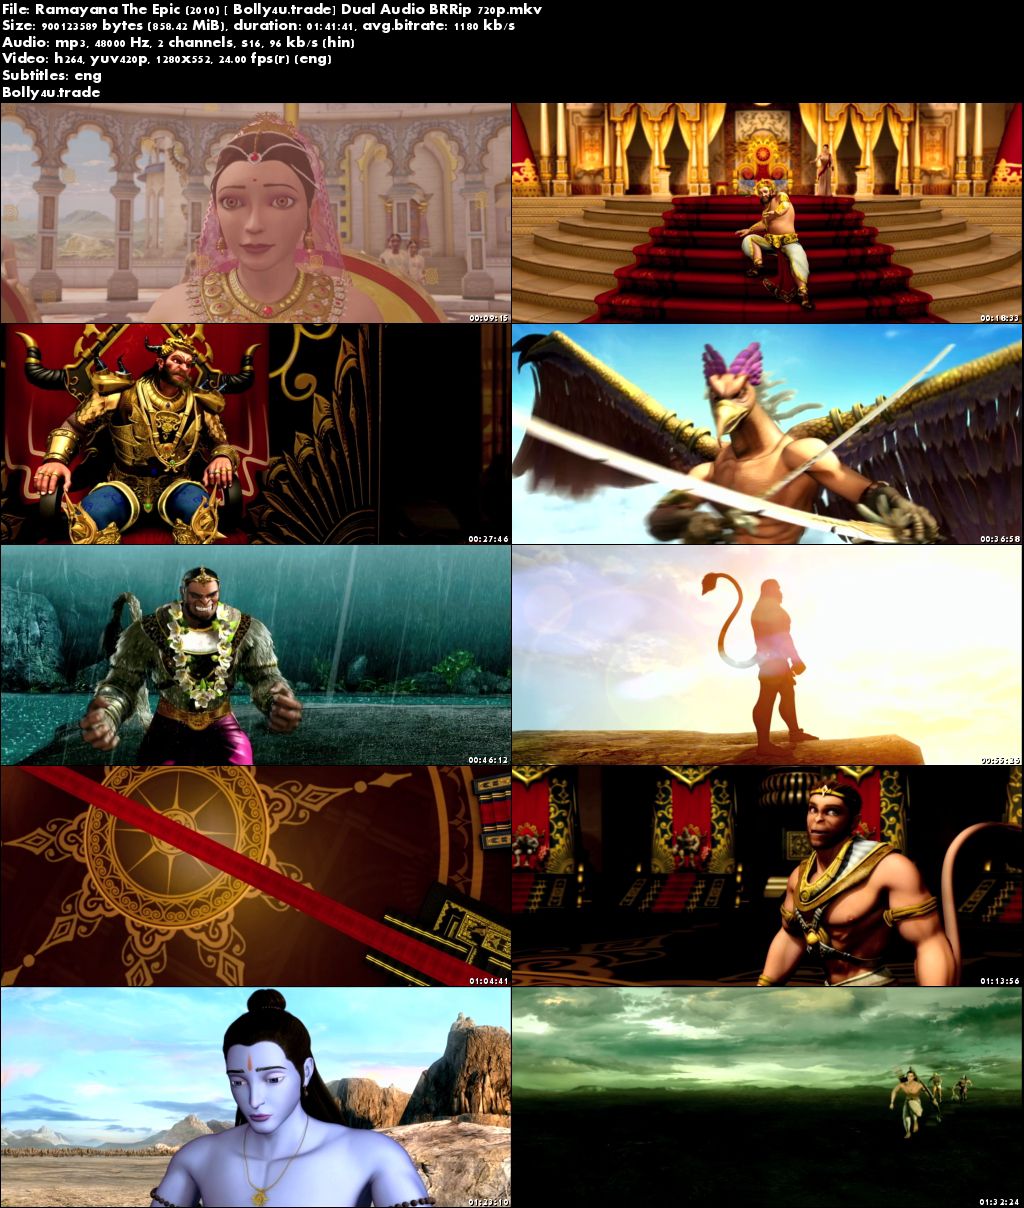  Ramayana The Epic 2010 BluRay 300MB Hindi 480p Download